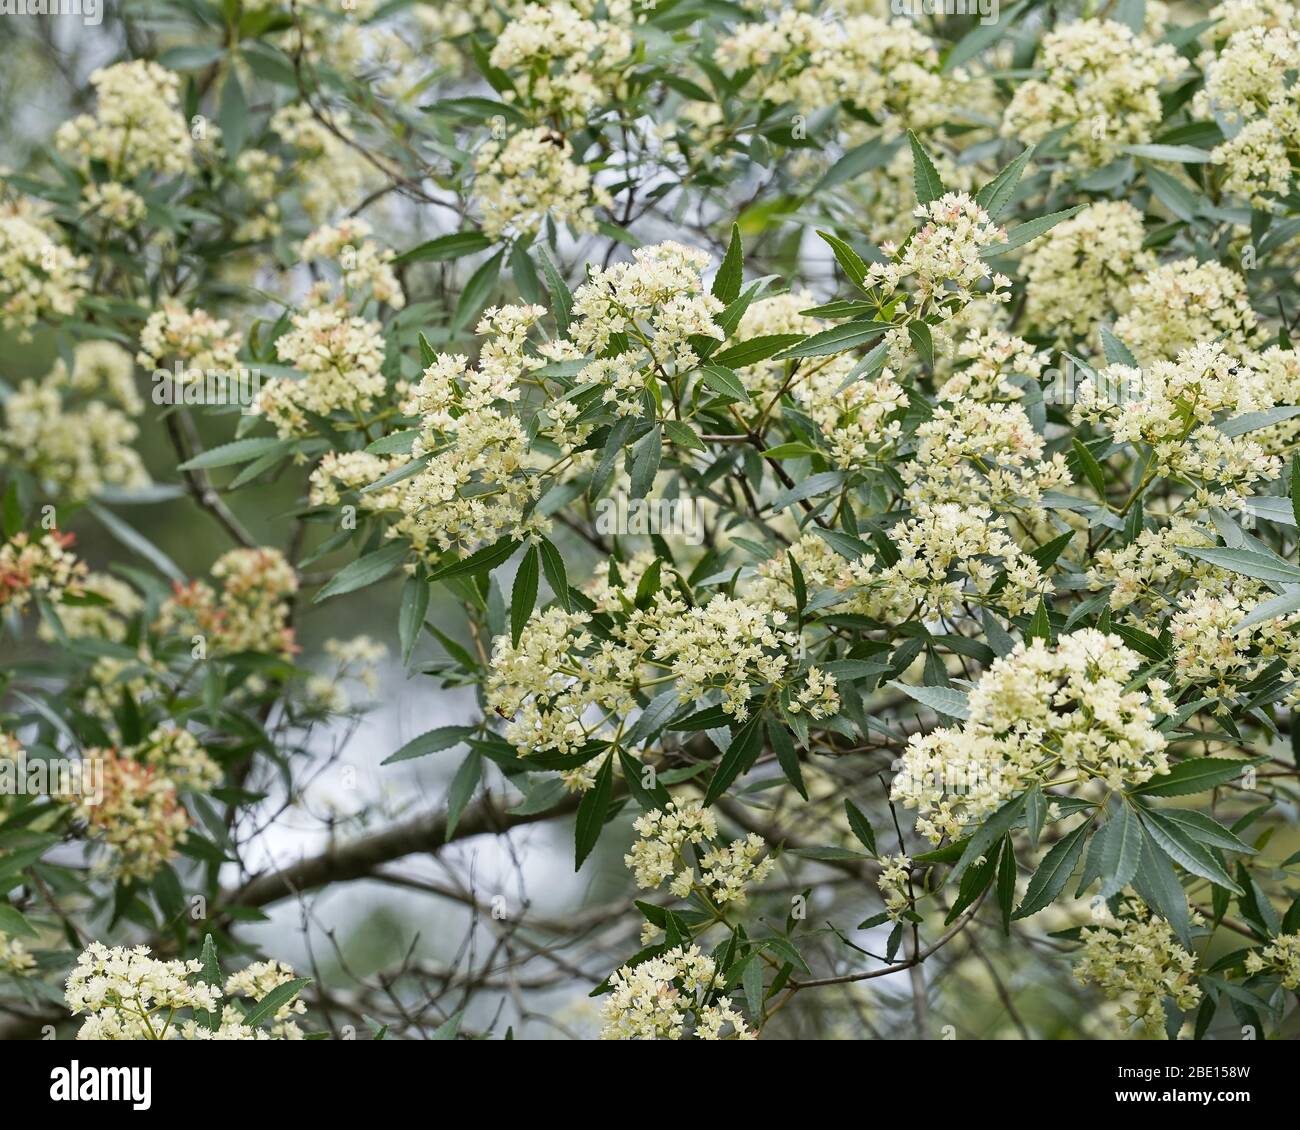 Australian Christmas Bush flowers, in abundance, on the tree. Stock Photo